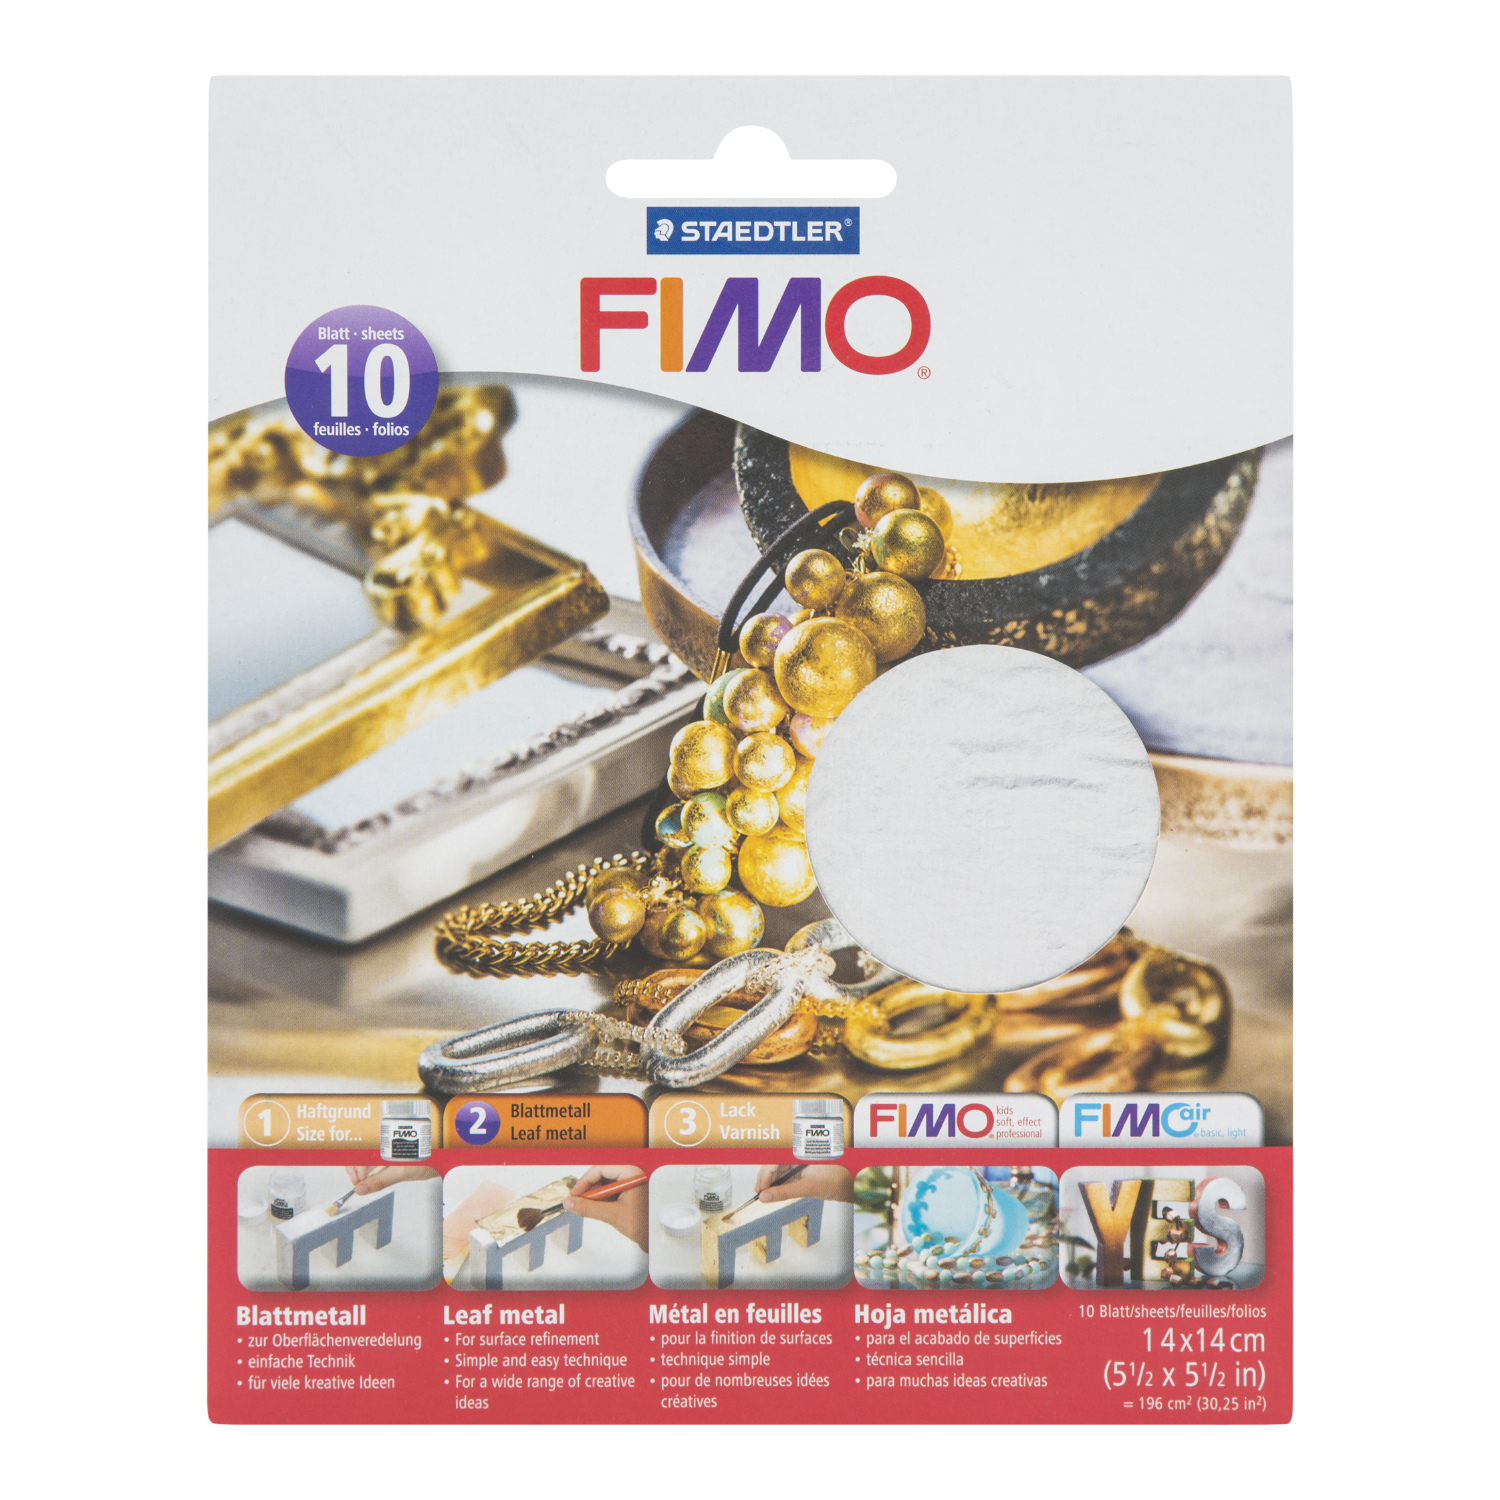 Staedtler FIMO Soft Modelling Clay Block - Light Flesh Image 2